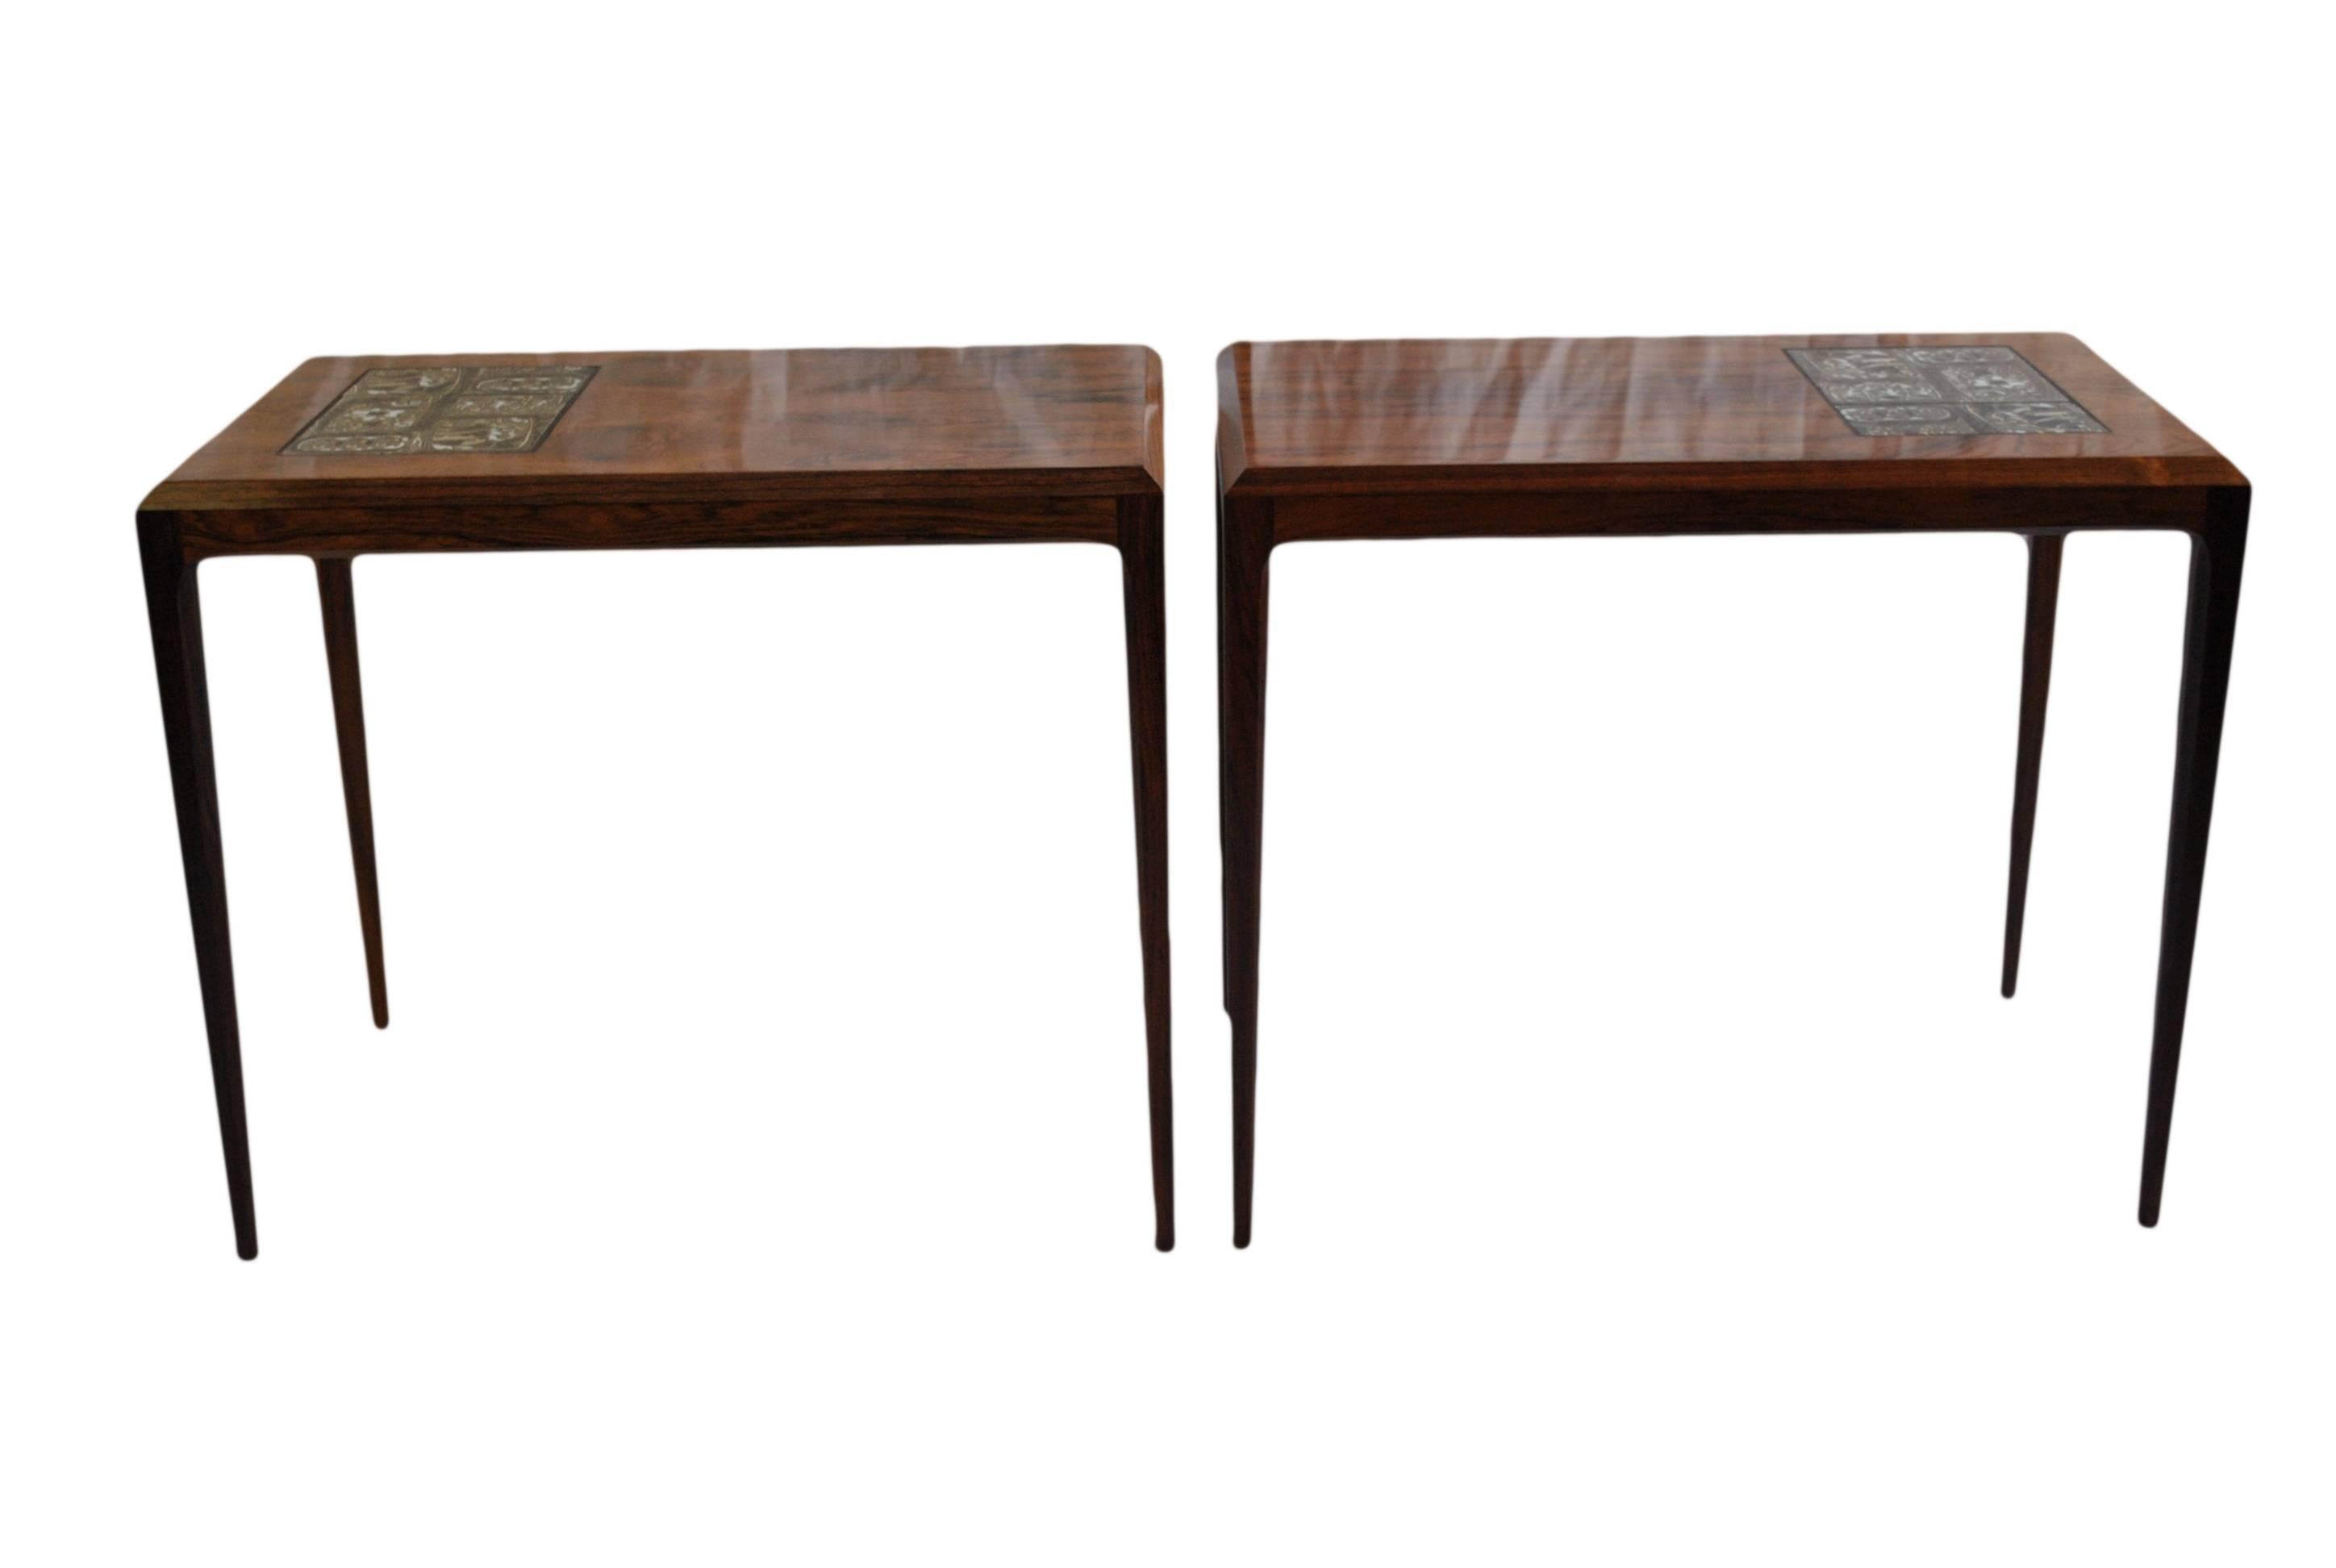 20th Century Pair of Midcentury Rosewood Tables by Johannes Andersen